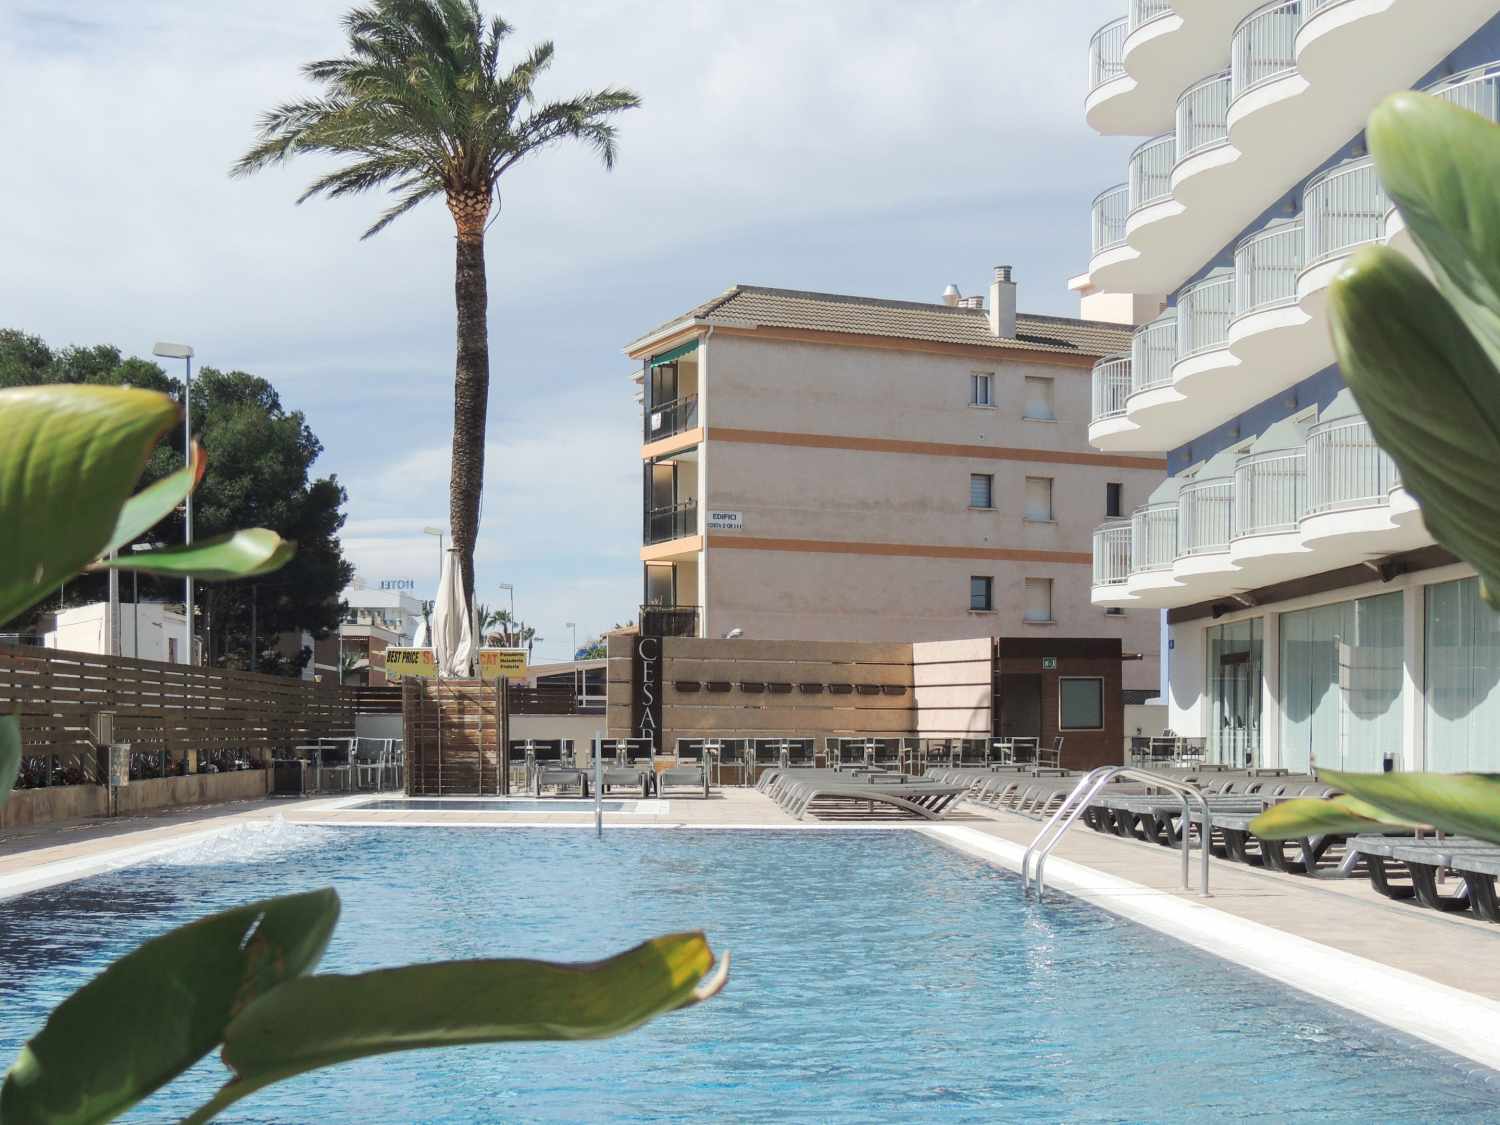 Hotel César Augustus, Cambrils de Mar, Costa Dorada, Spanje